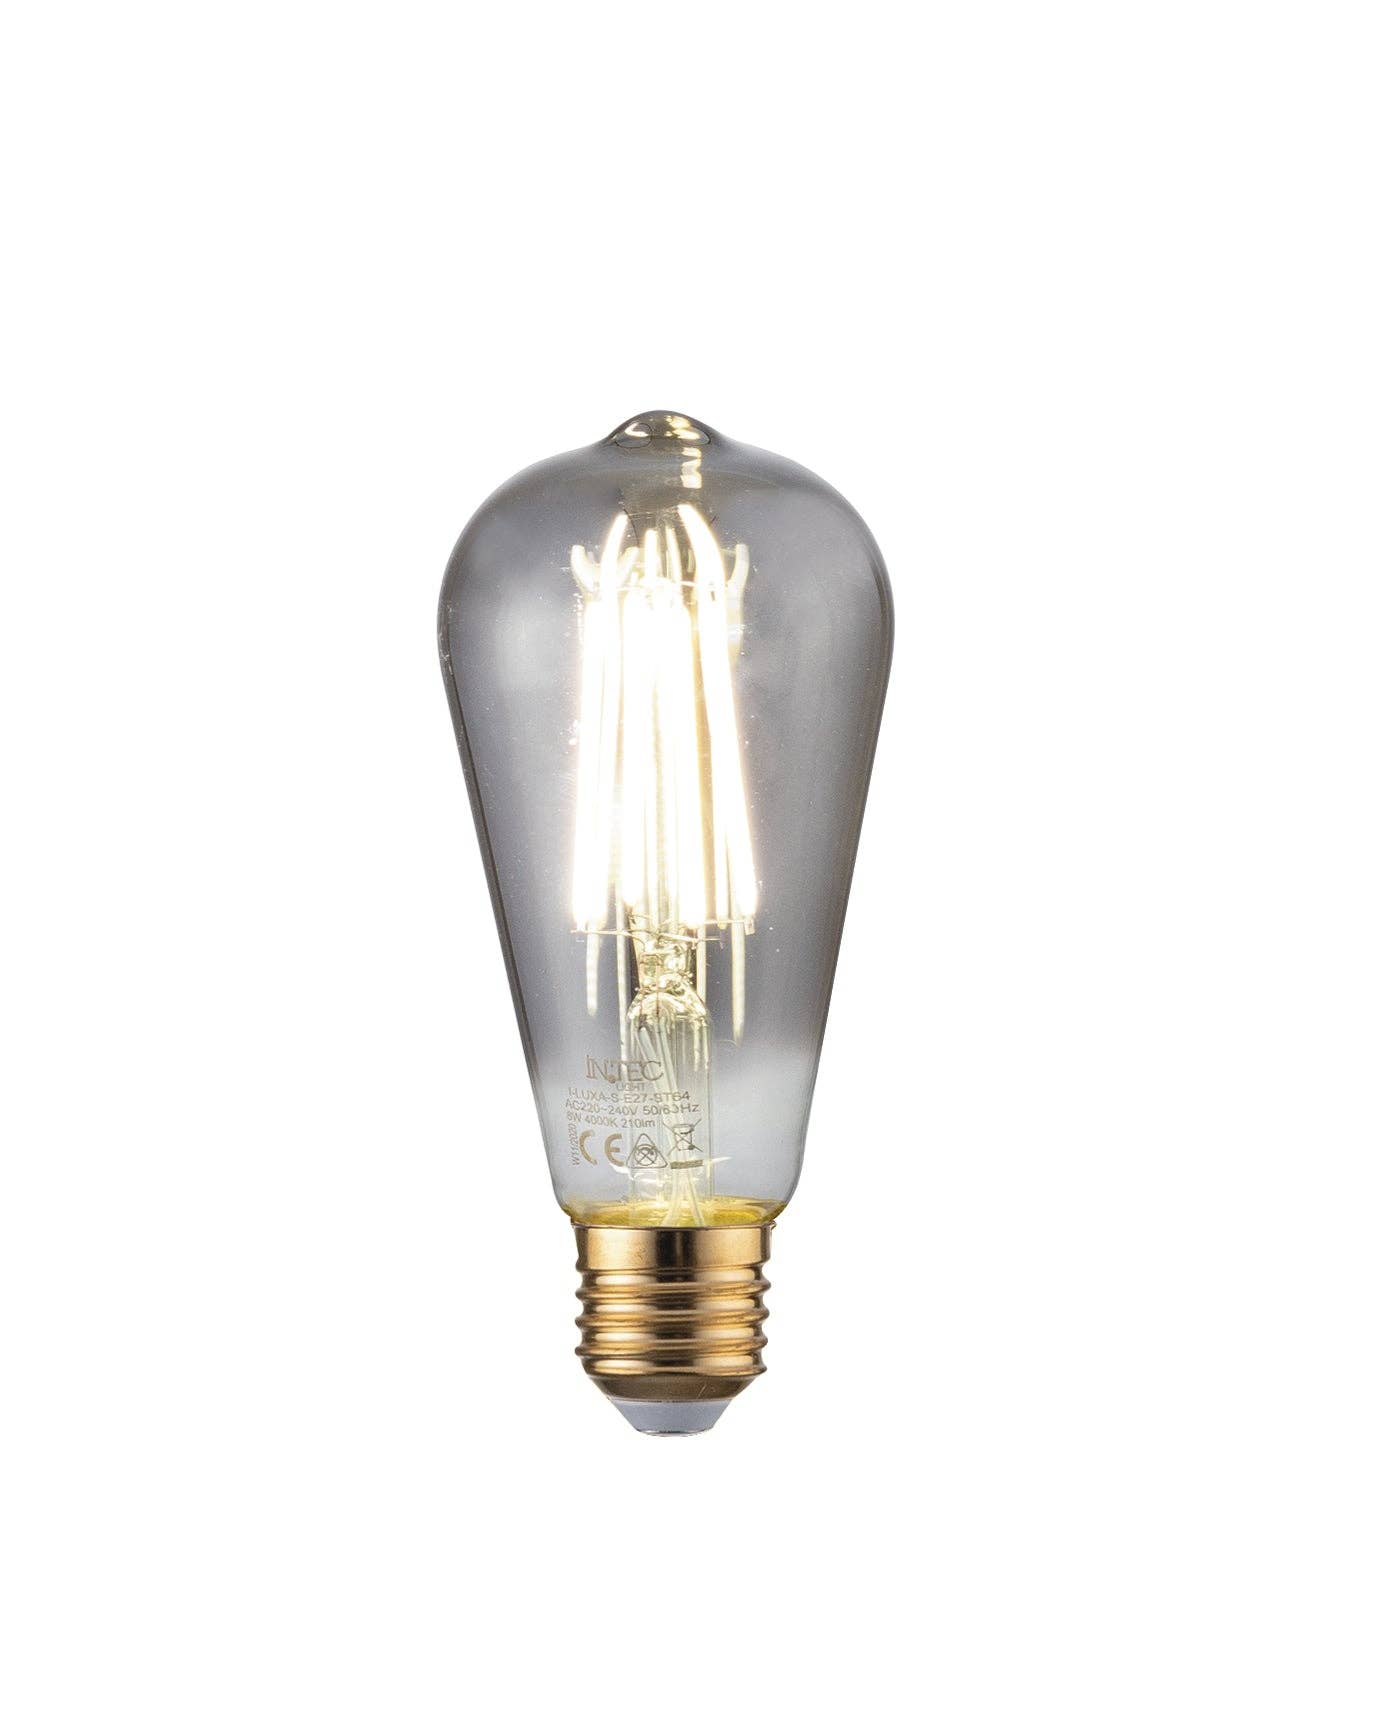 8W LED Light Bulb in Smoke